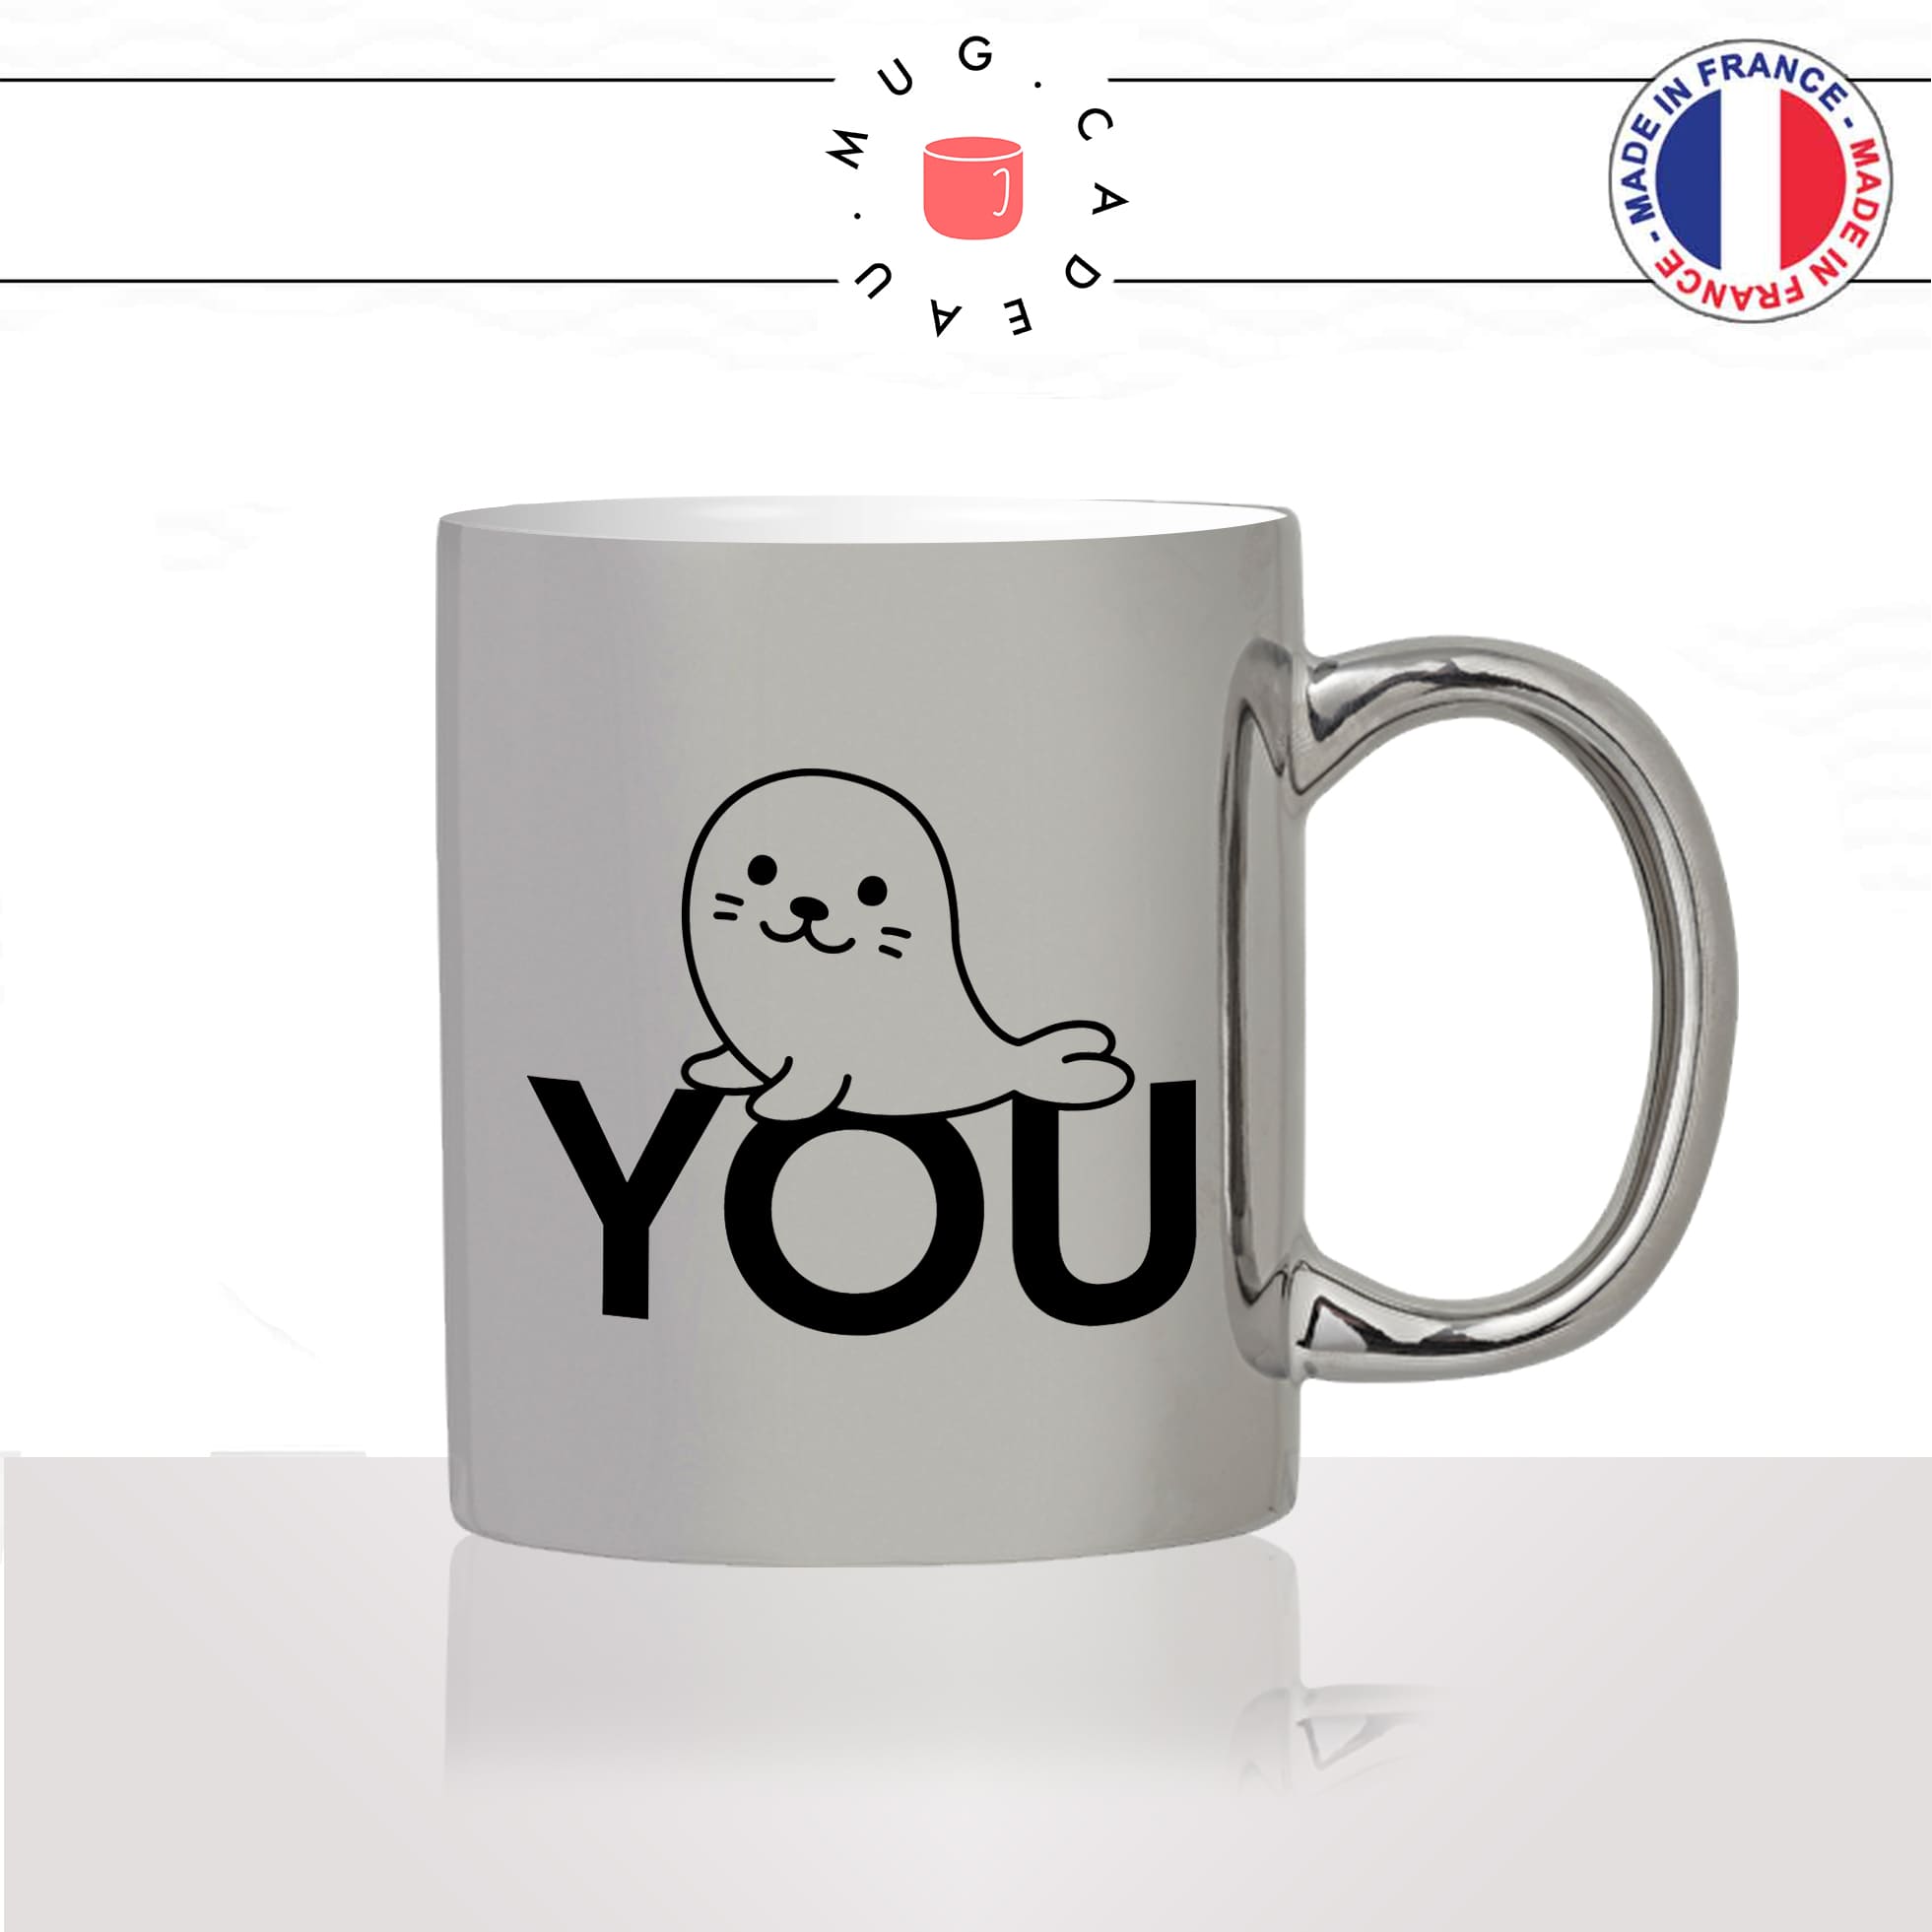 mug-tasse-argenté-argent-gris-silver-phoque-you-dessin-animal-fuck-u-insulte-mignon-humour-fun-idée-cadeau-originale-cool2